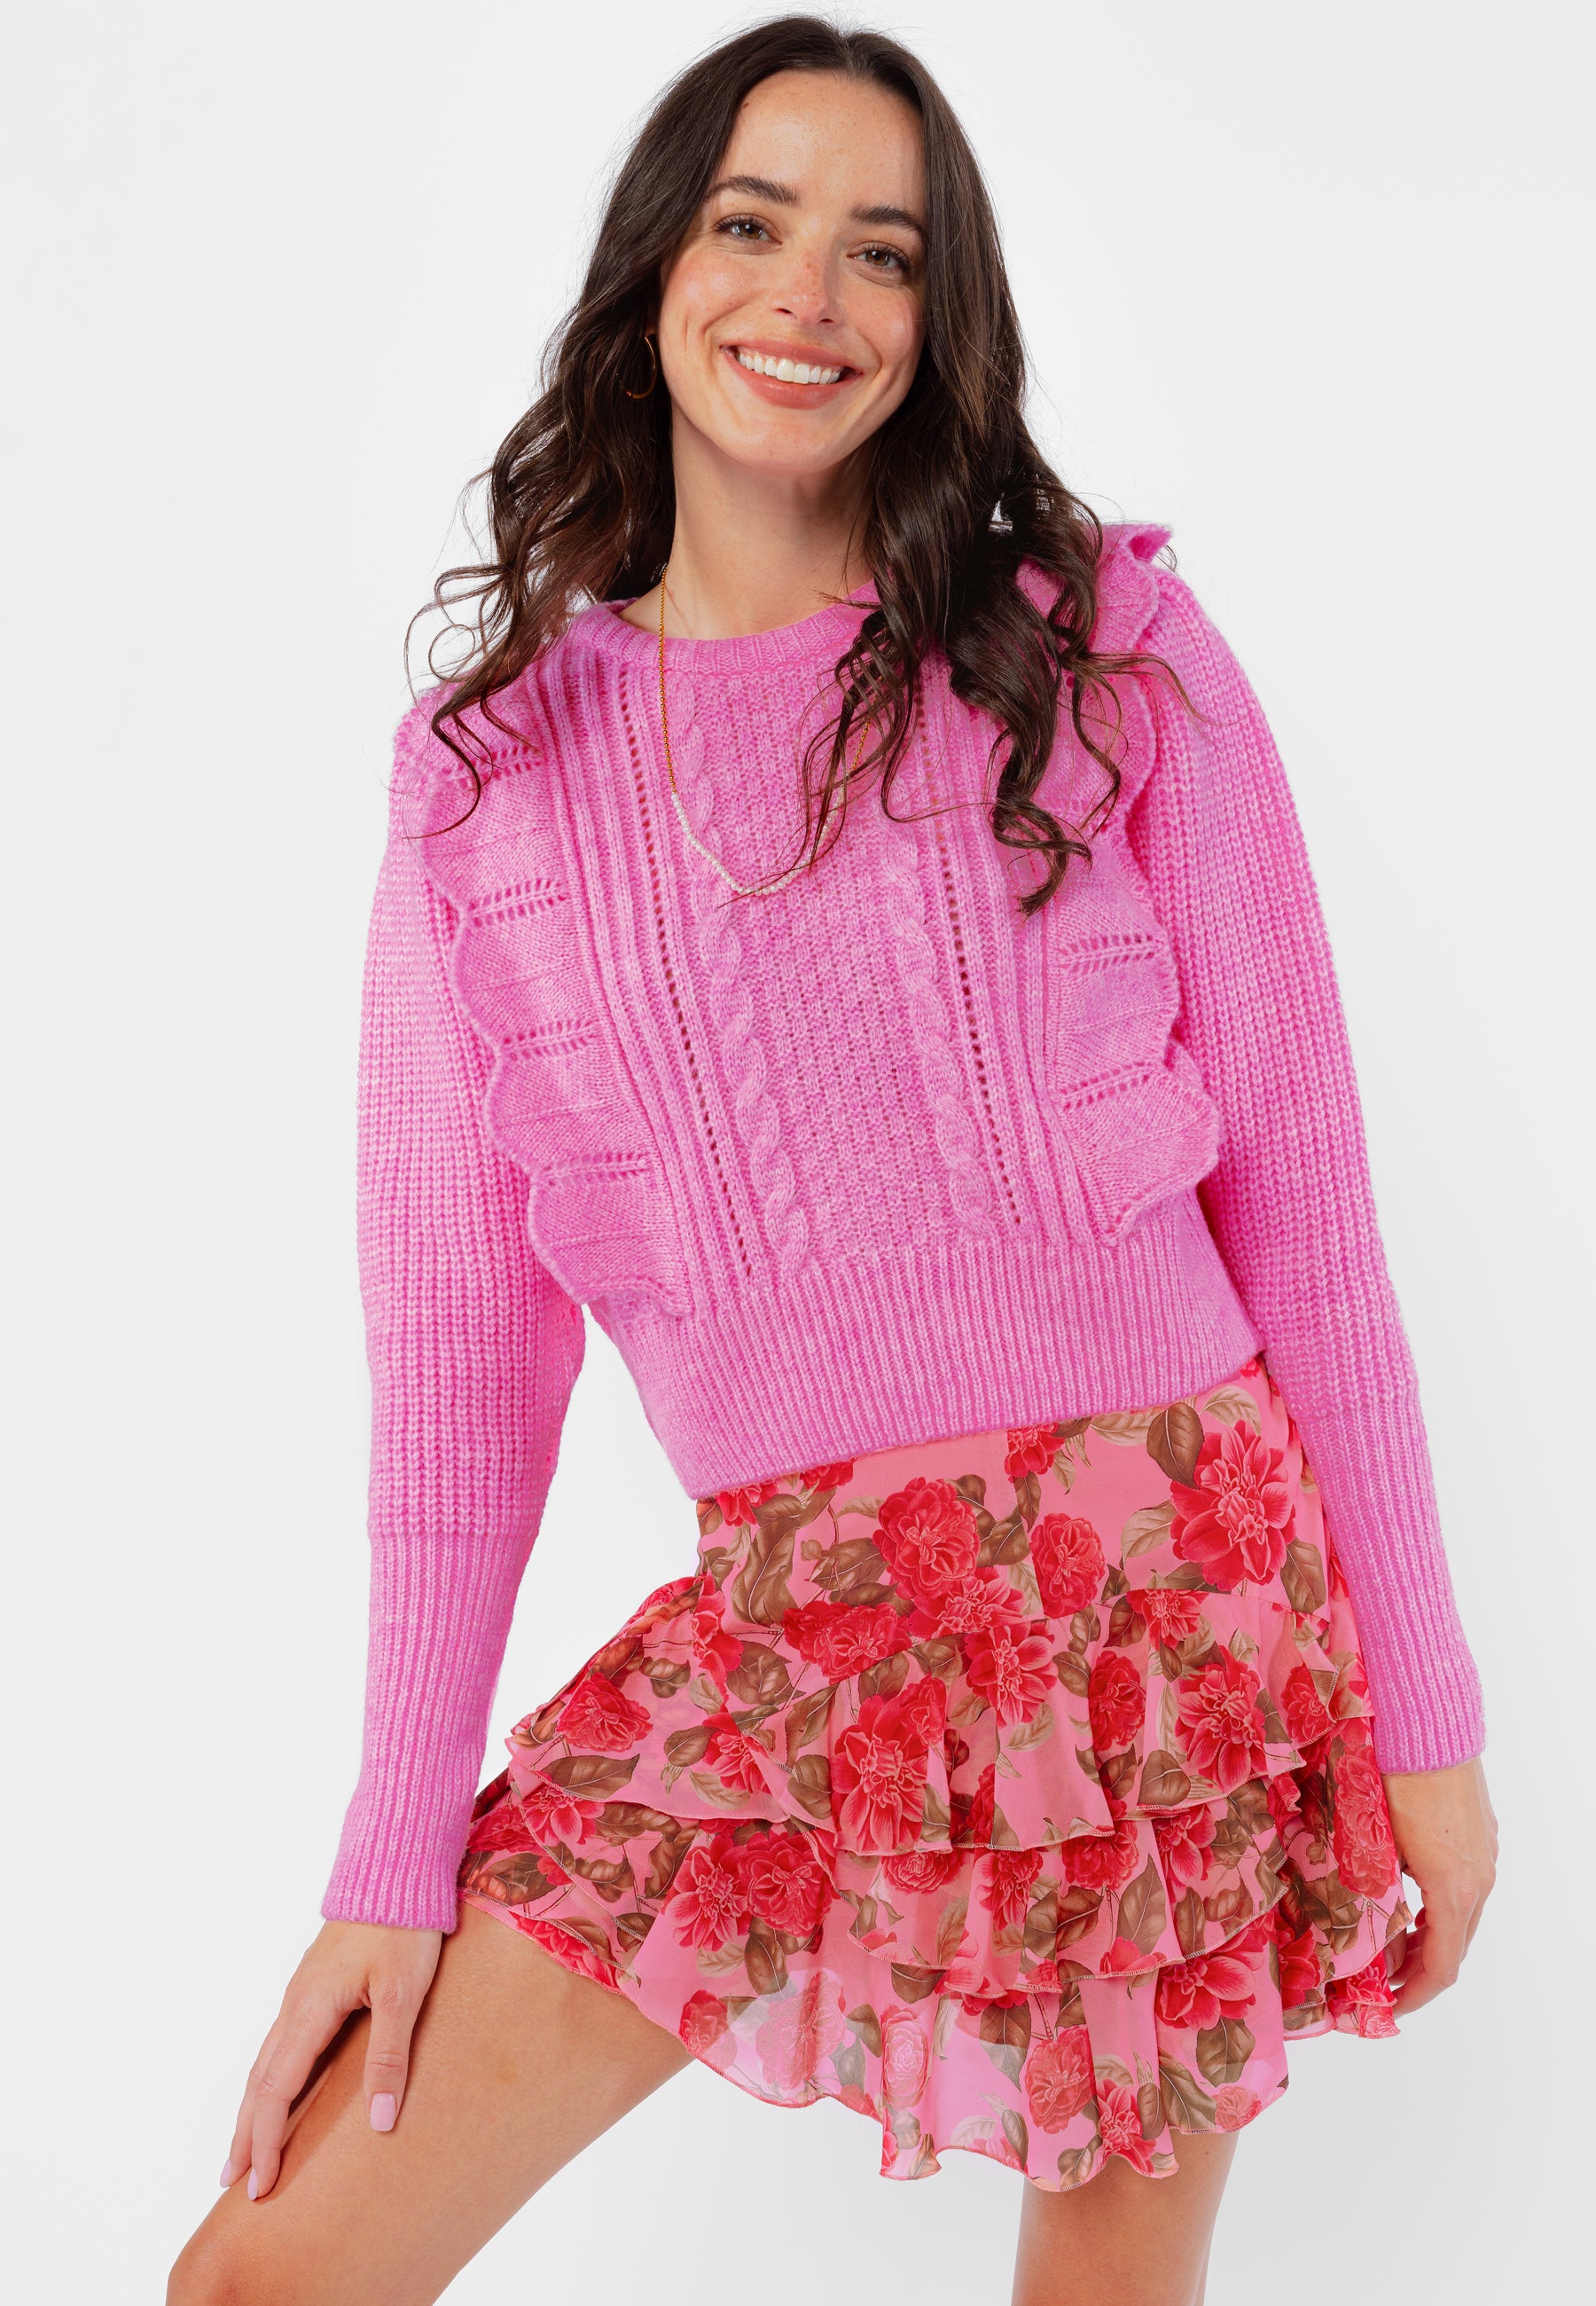 ELLI short pink jumper with an eye-catching ruffle